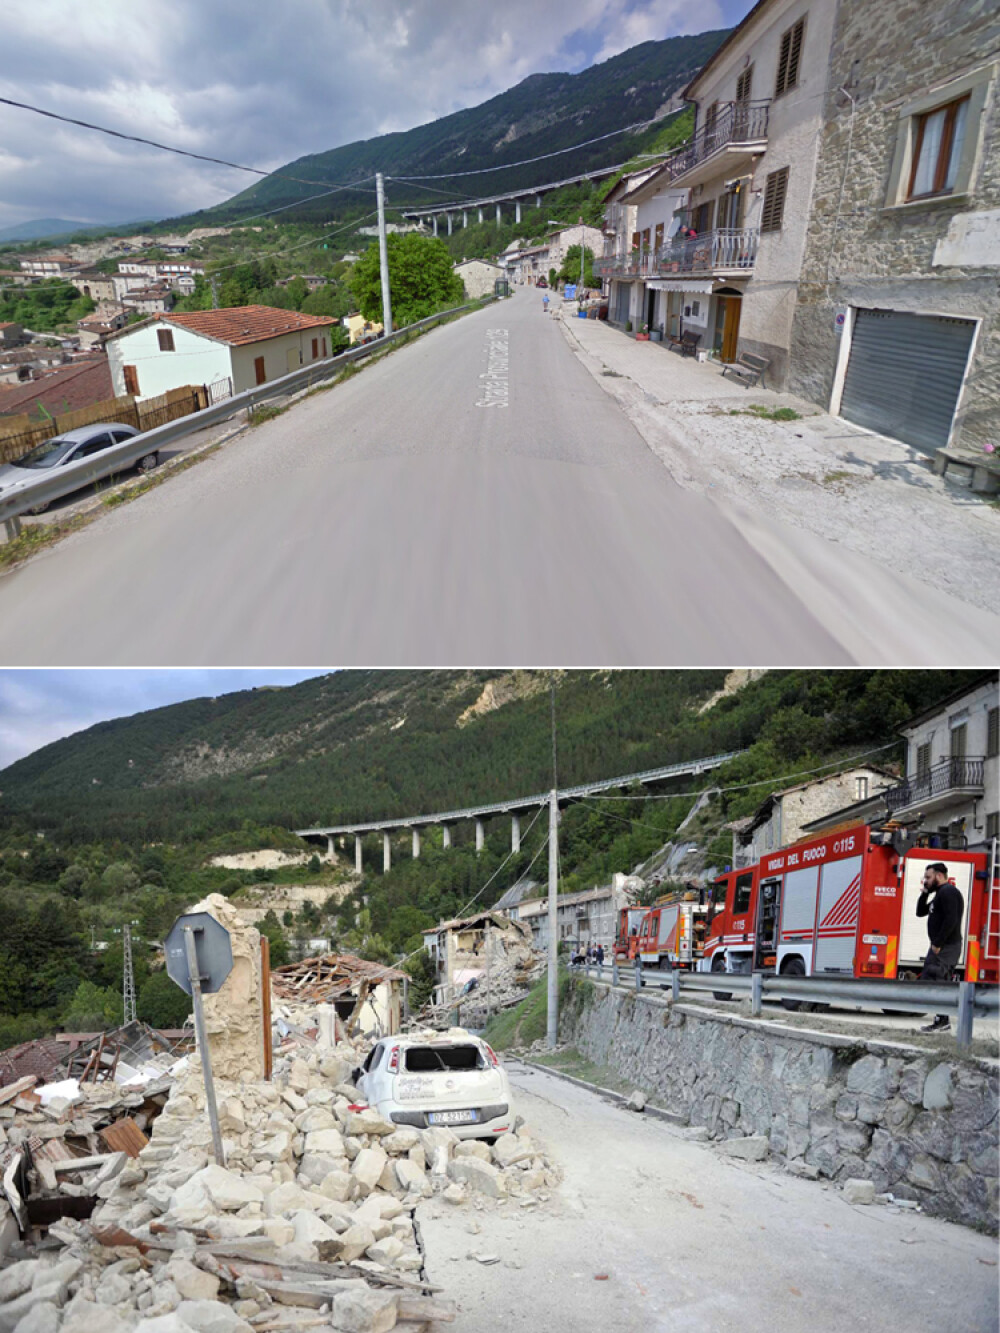 Imagini din localitatile Amatrice si Pescara del Tronto inainte si dupa cutremurul devastator. GALERIE FOTO - Imaginea 2